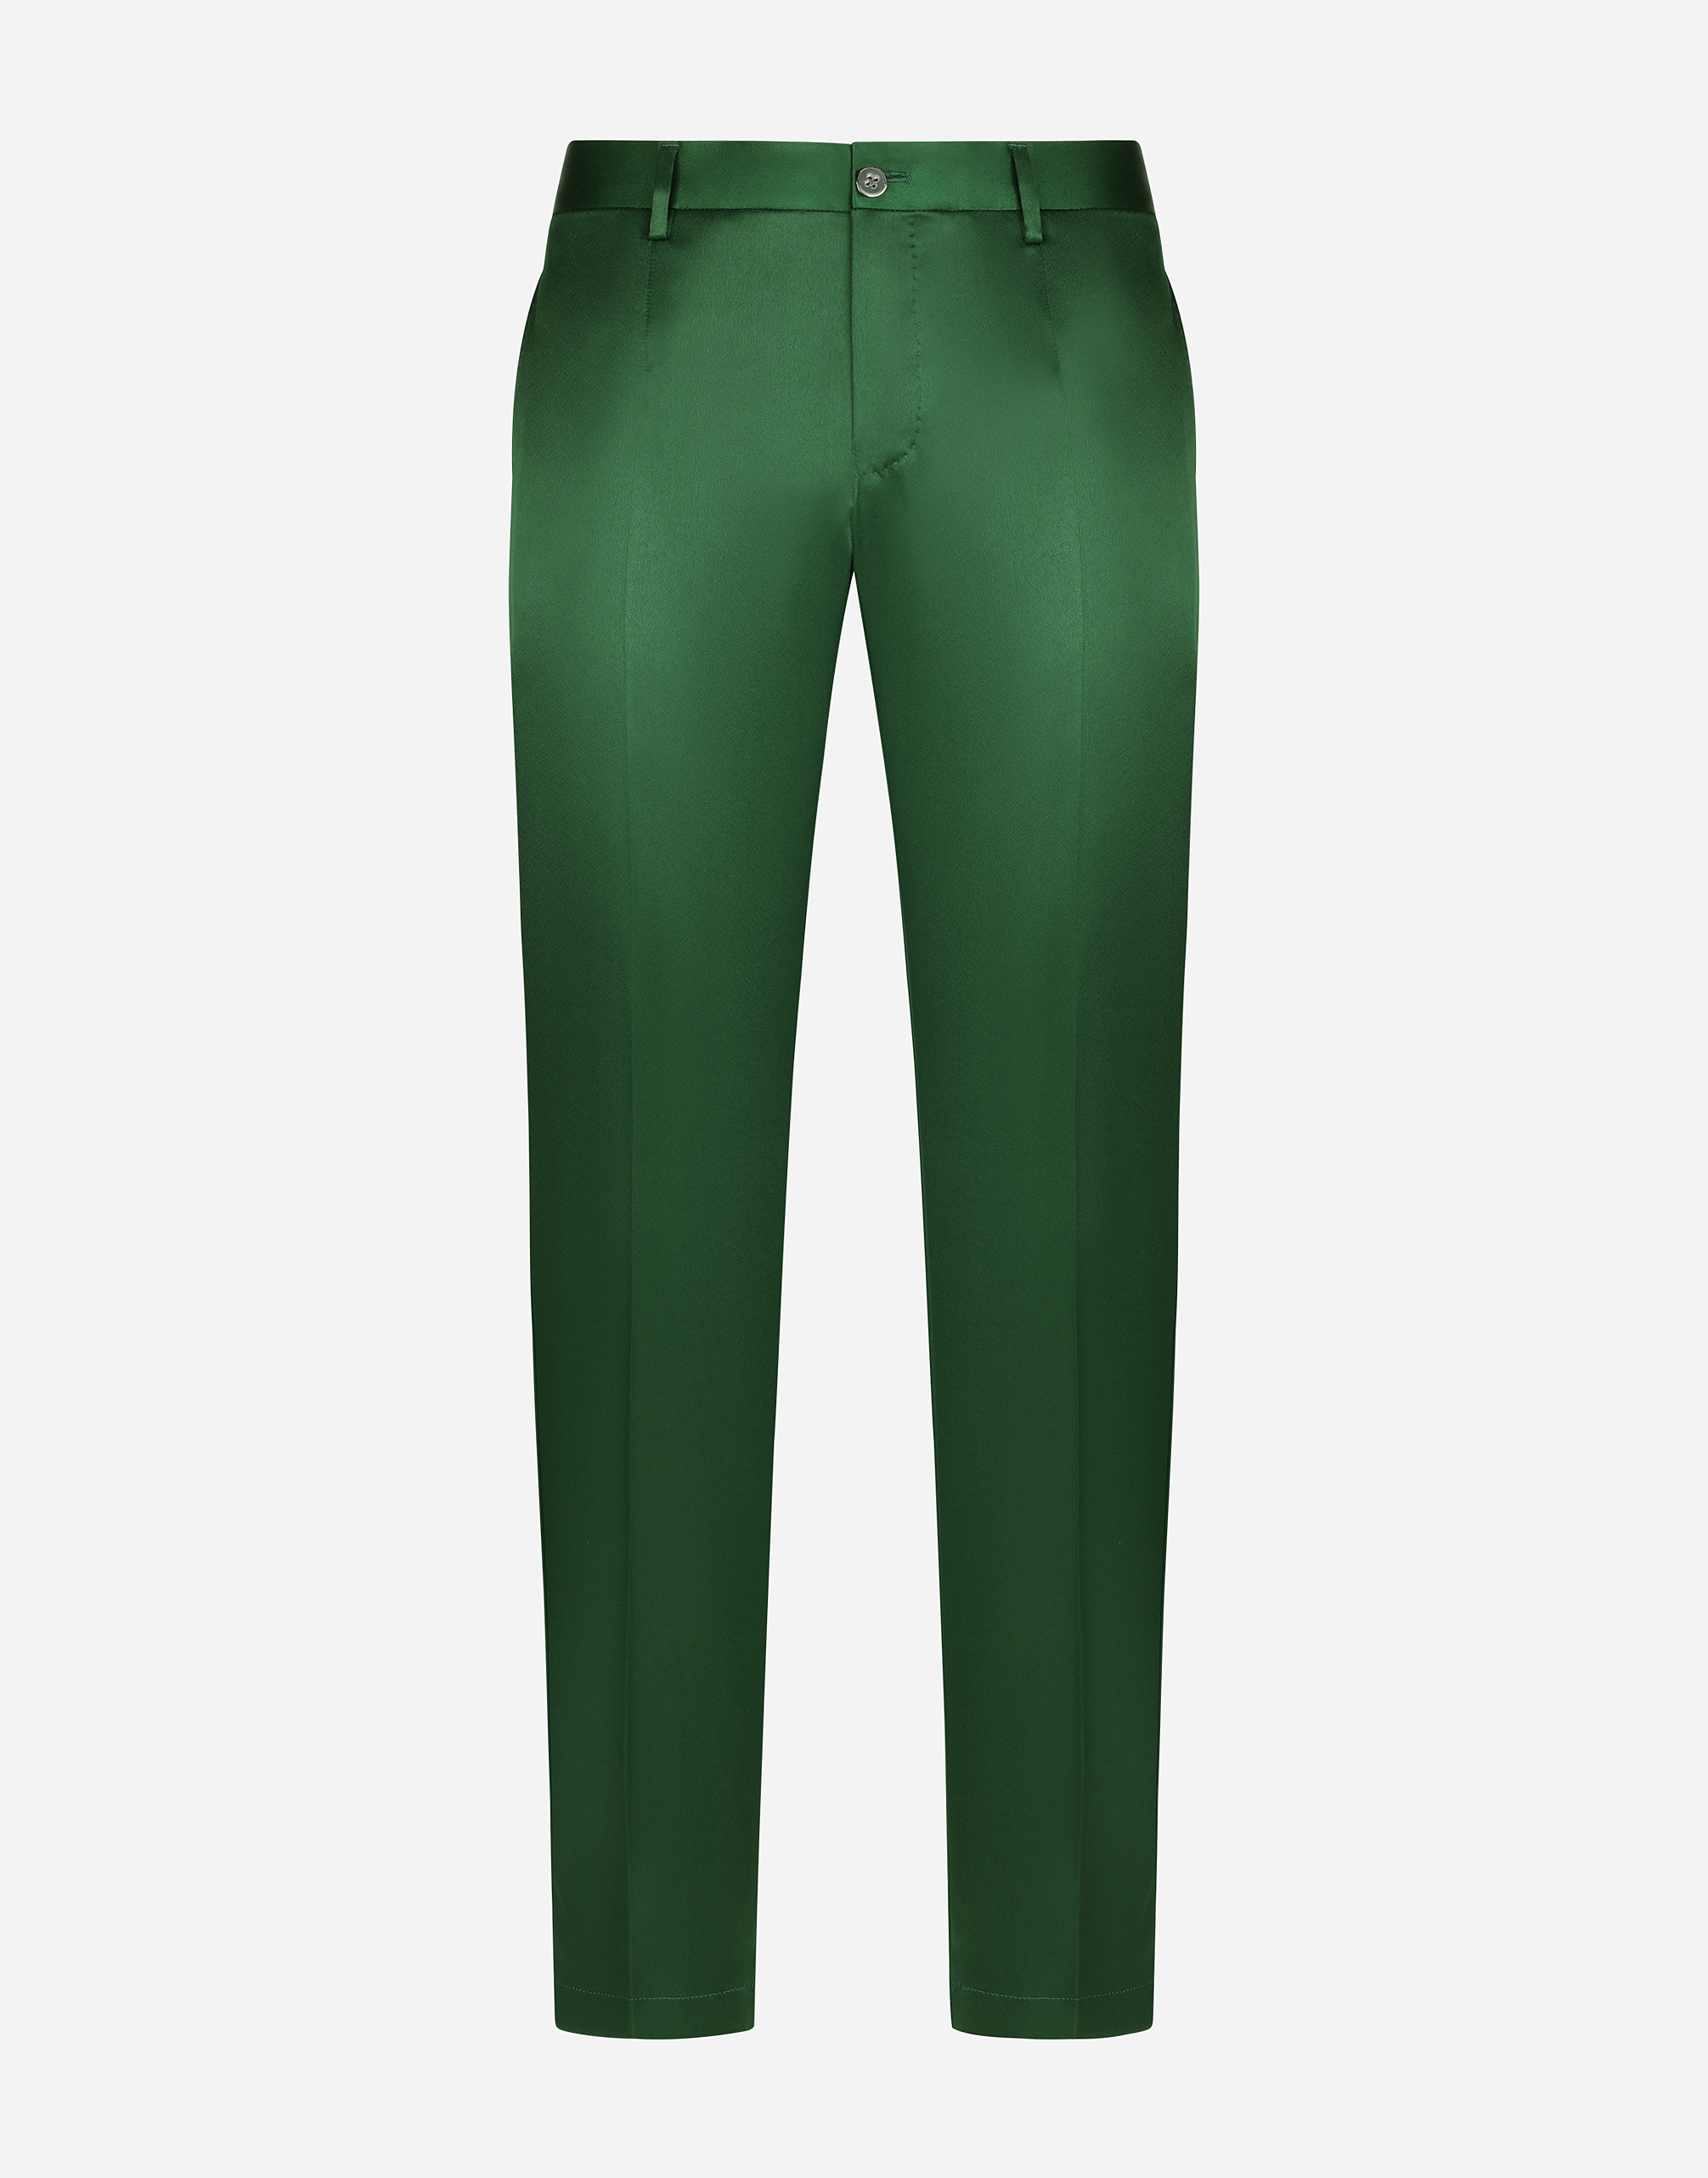 Satin pants in Green